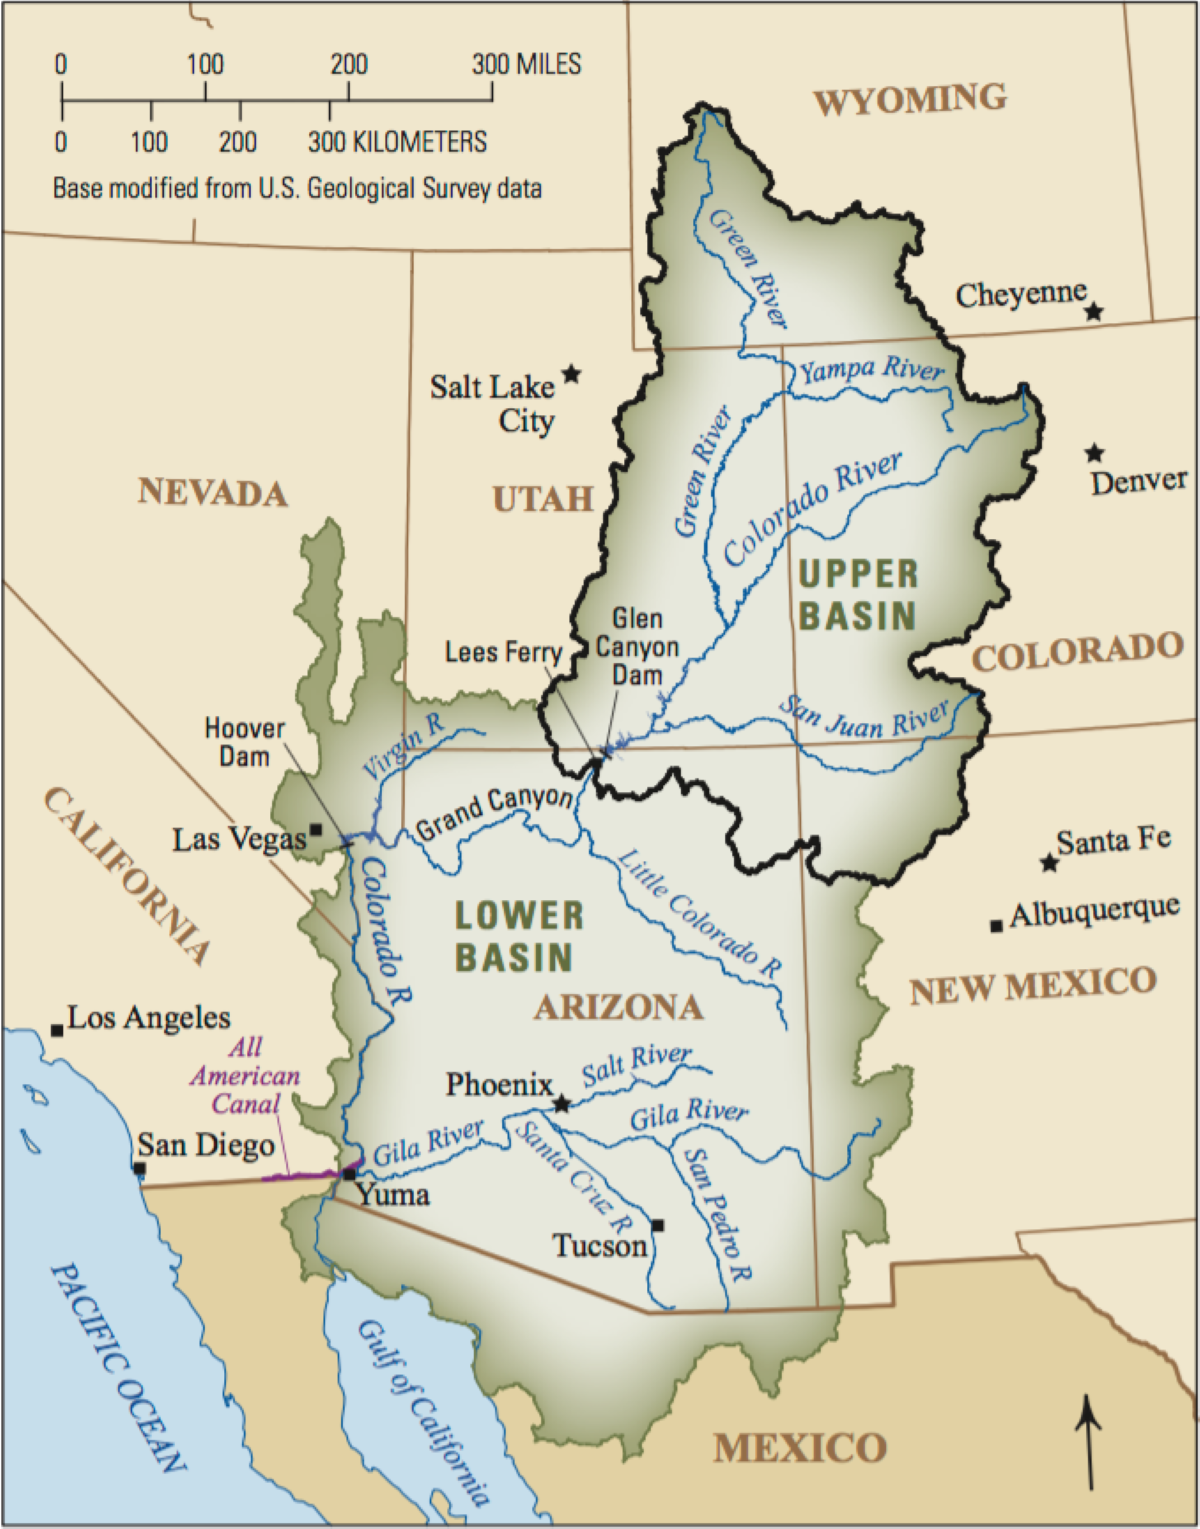 Colorado River Drainage Basin Explained